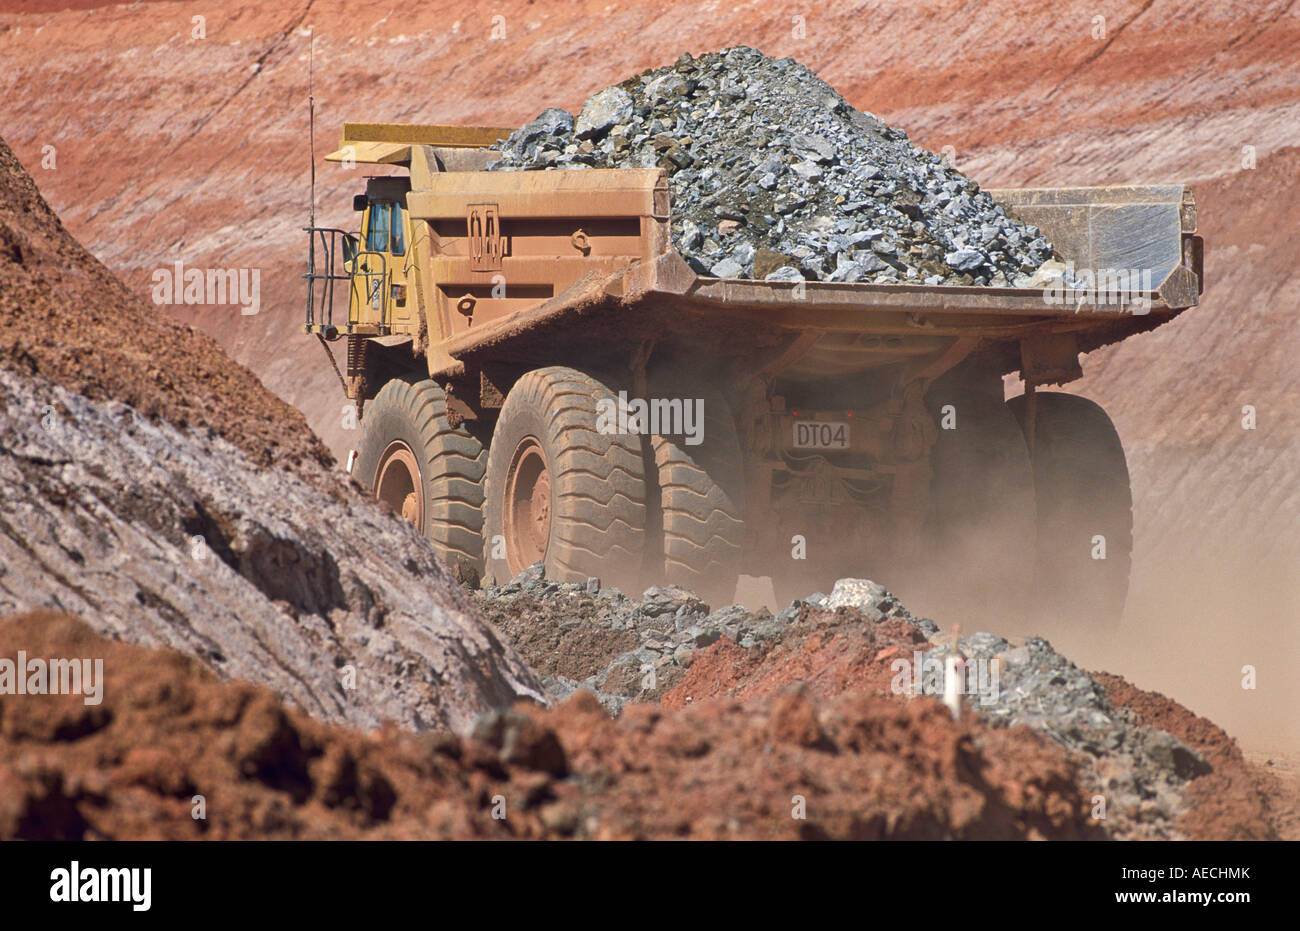 Giant ore truck, Australia Stock Photo